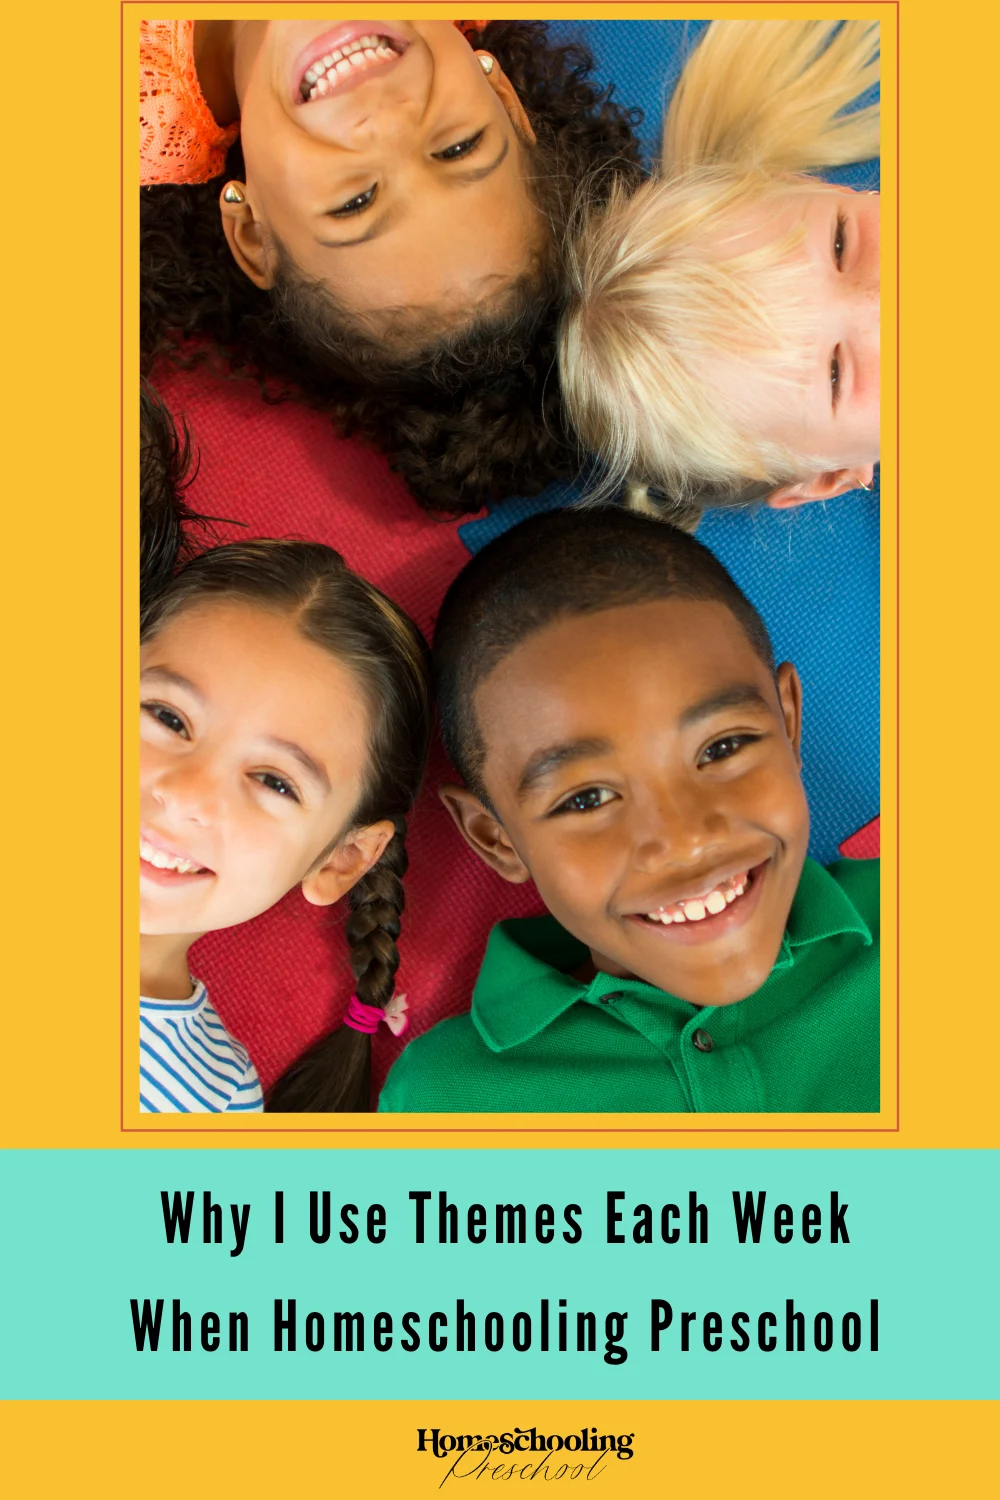 Why I Use Themes Each Week When Homeschooling Preschool